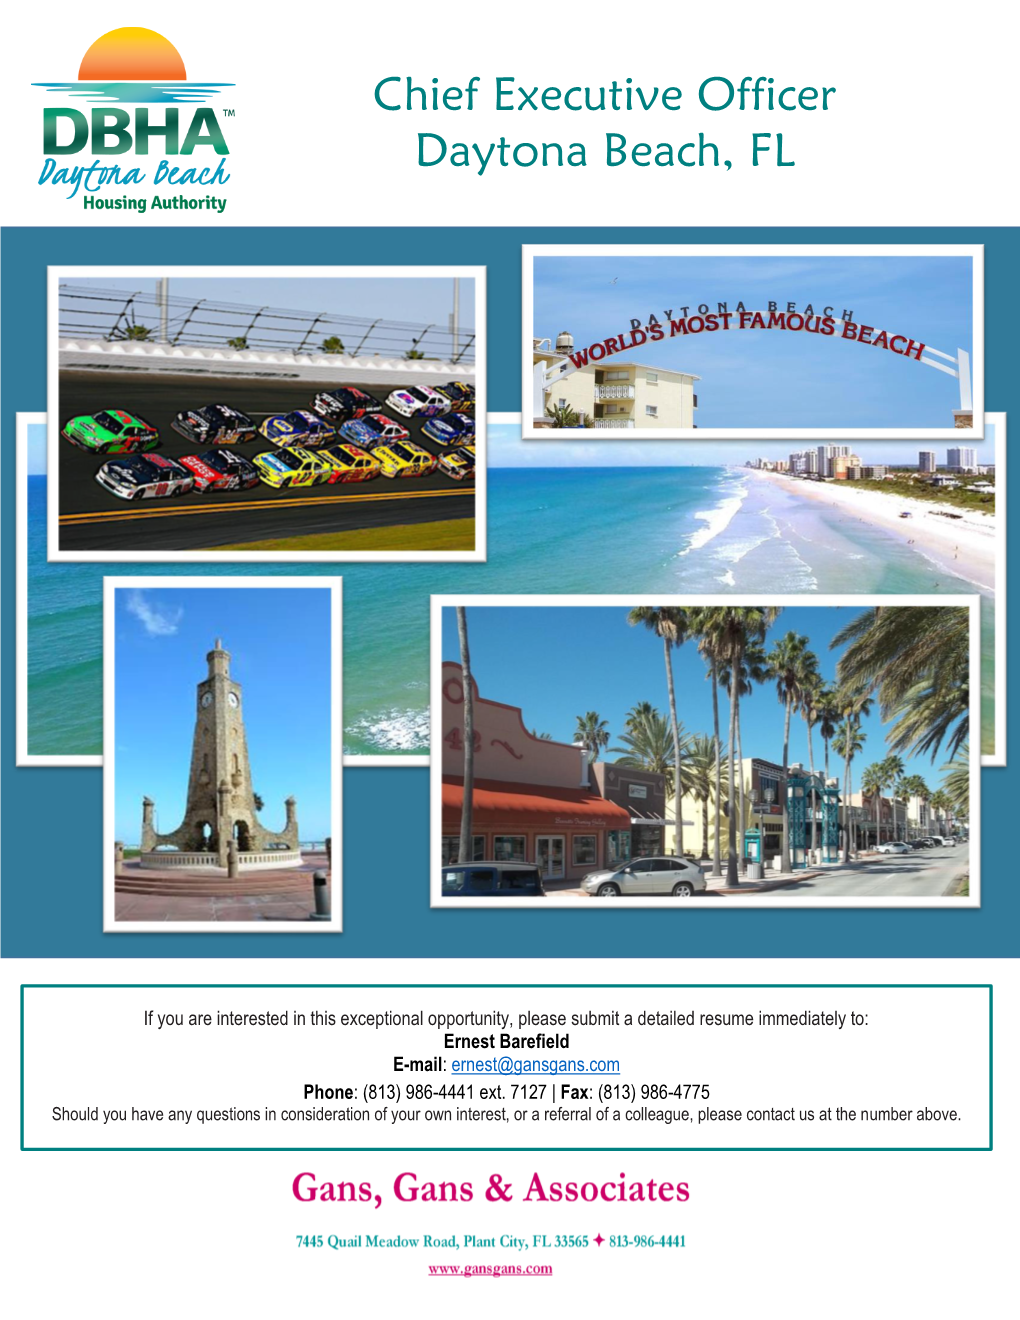 Chief Executive Officer Daytona Beach, FL